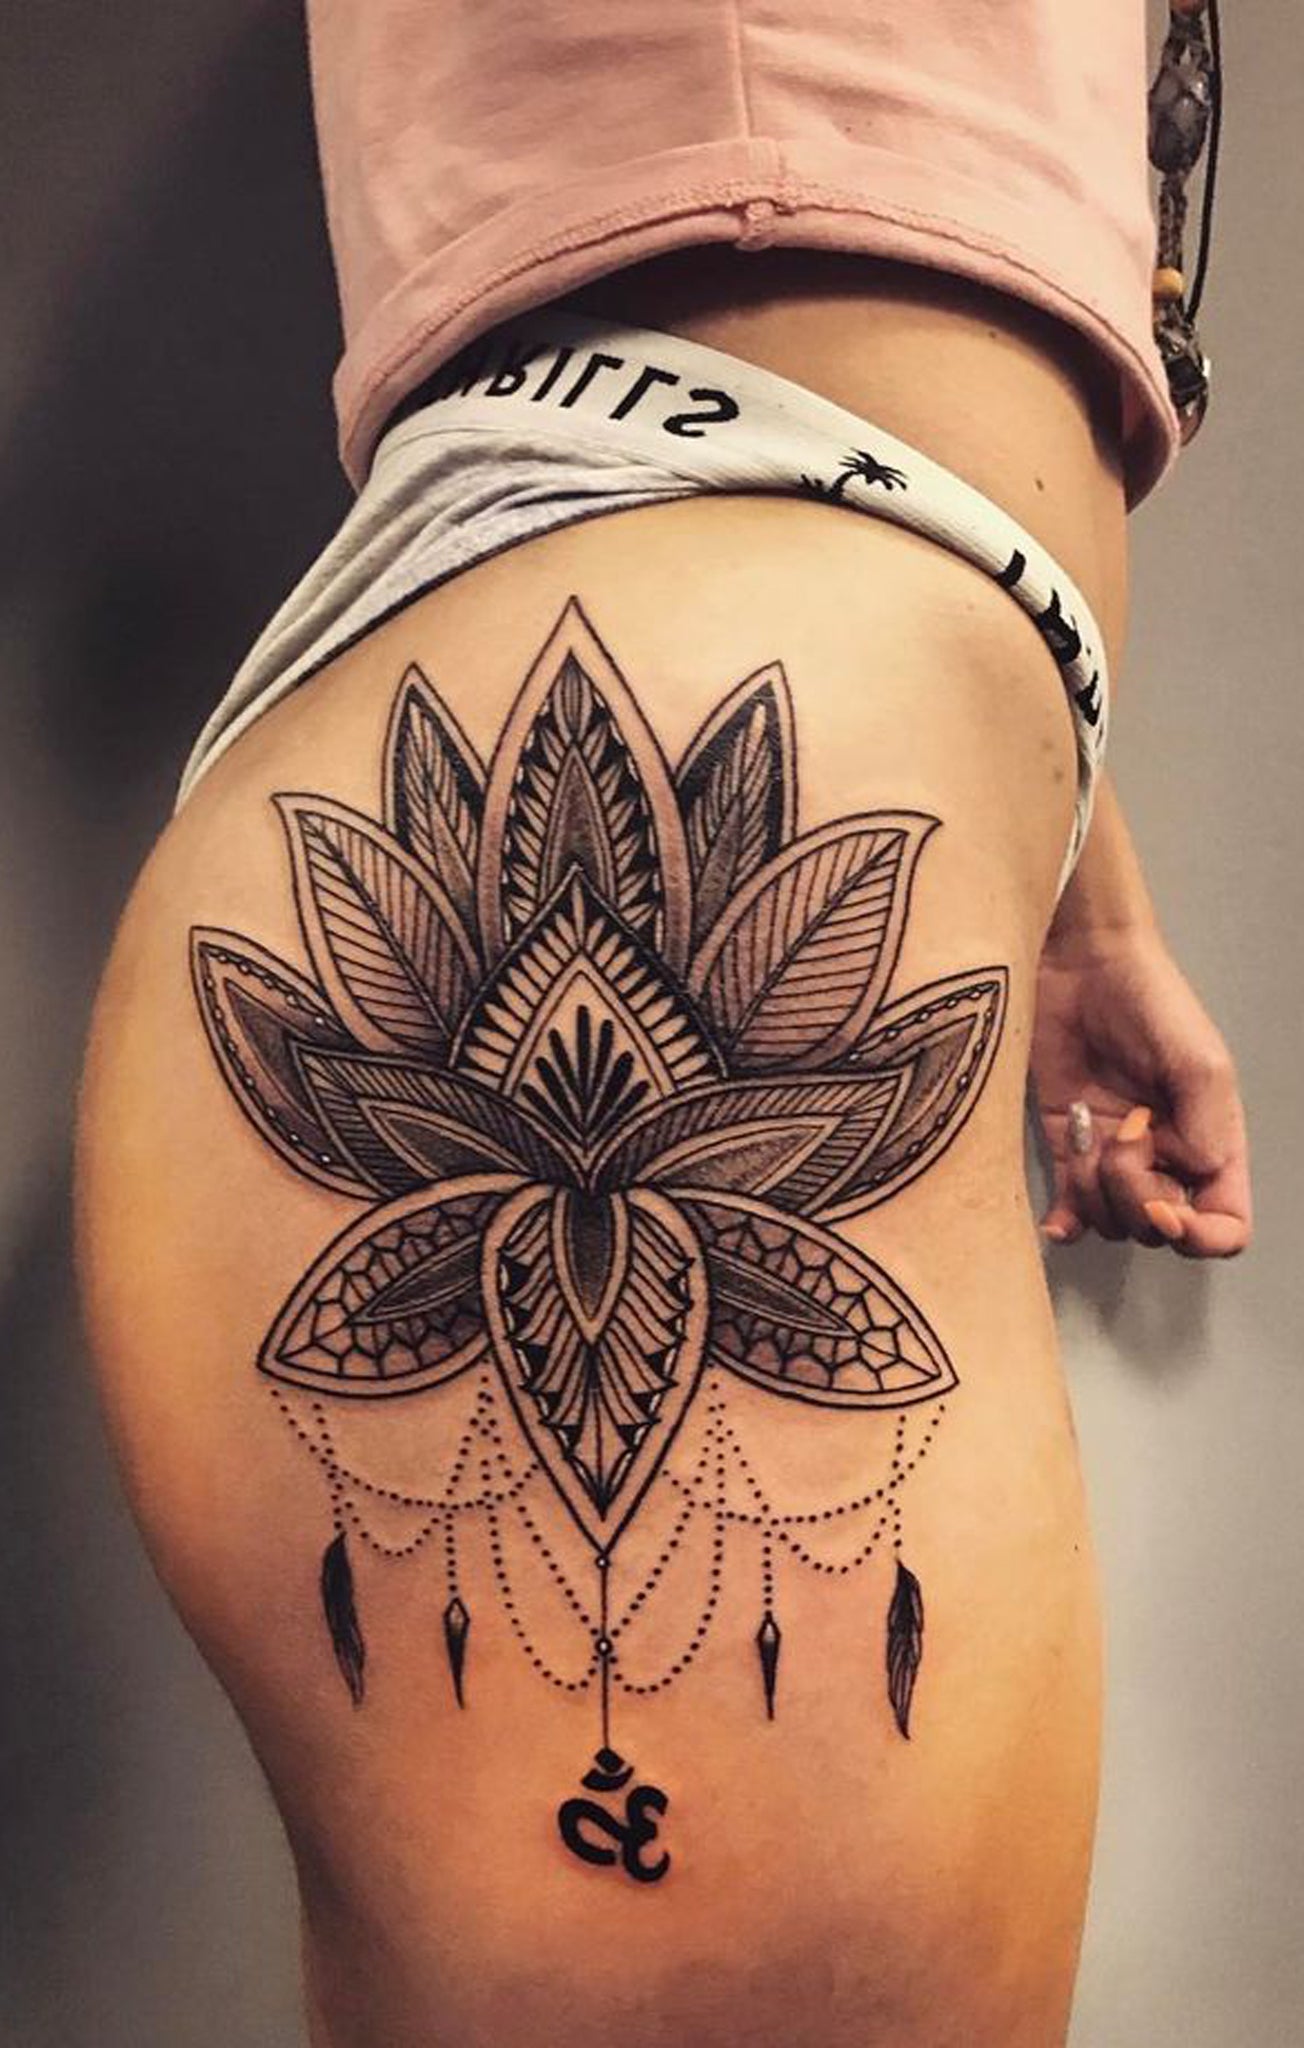 Lotus Chandelier Hip Tattoo Ideas for Women - Tribal Bohemian Flower Thigh Tat -  ideas de tatuaje de cadera de loto para las mujeres - www.MyBodiArt.com